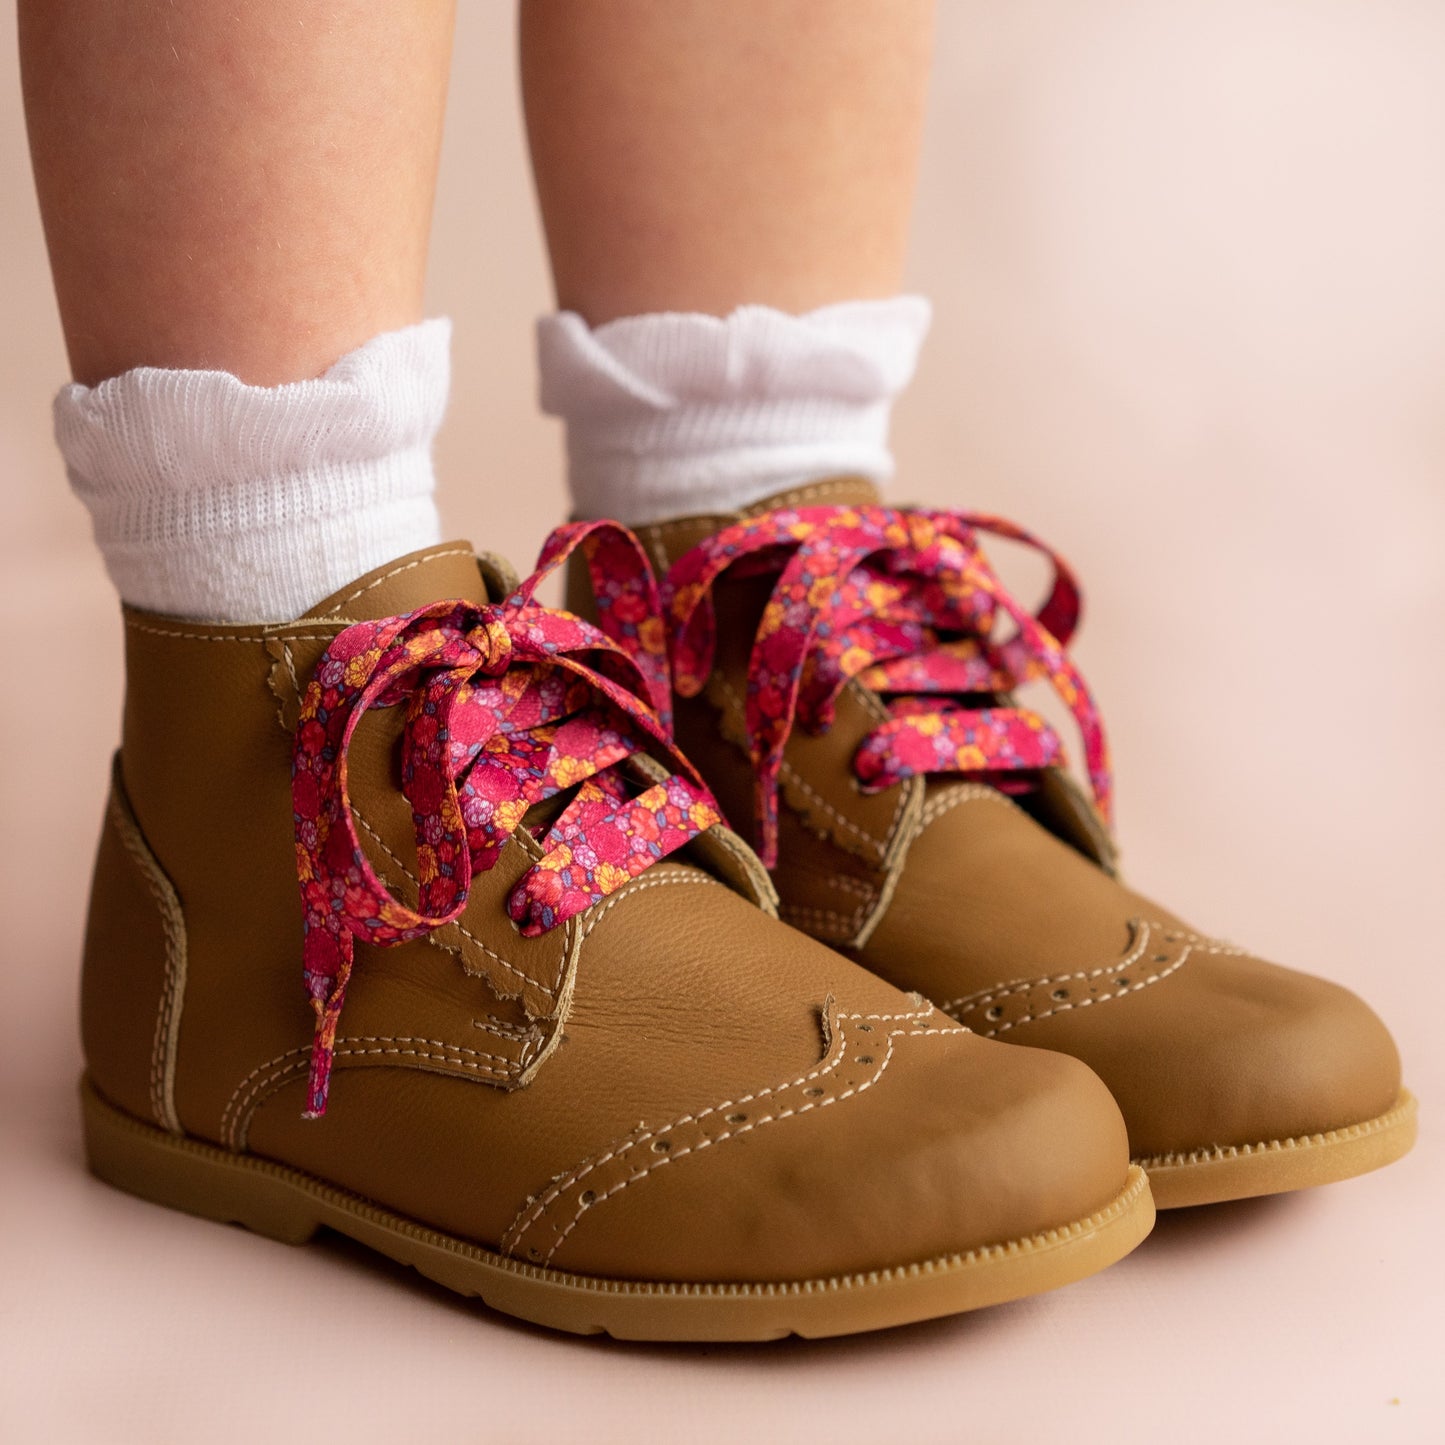 Ruffle Anklet Socks in Gray  - Doodlebug's Children's Boutique